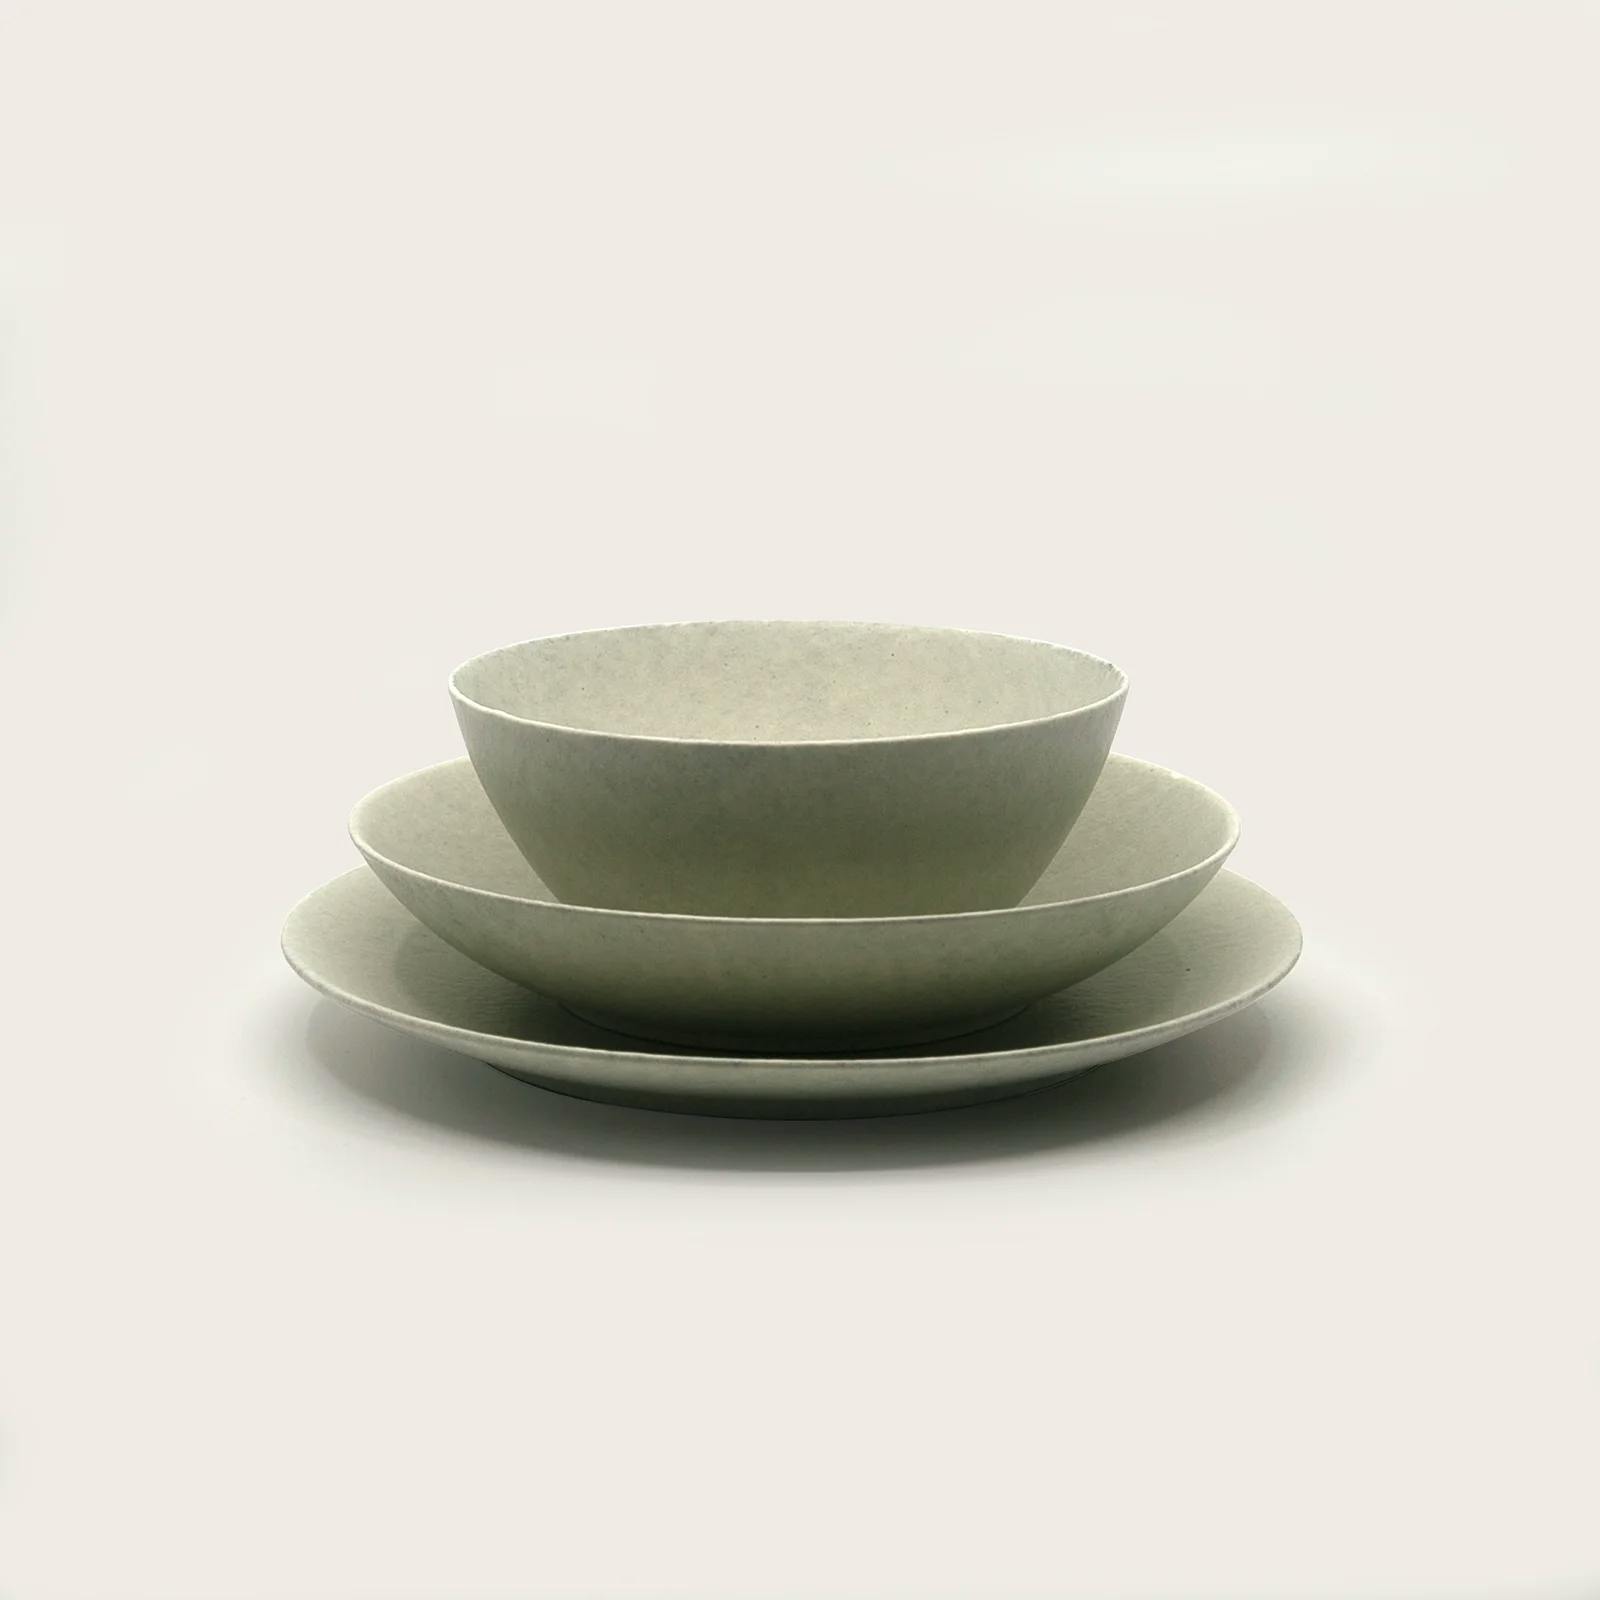 Image of shigaraki plates